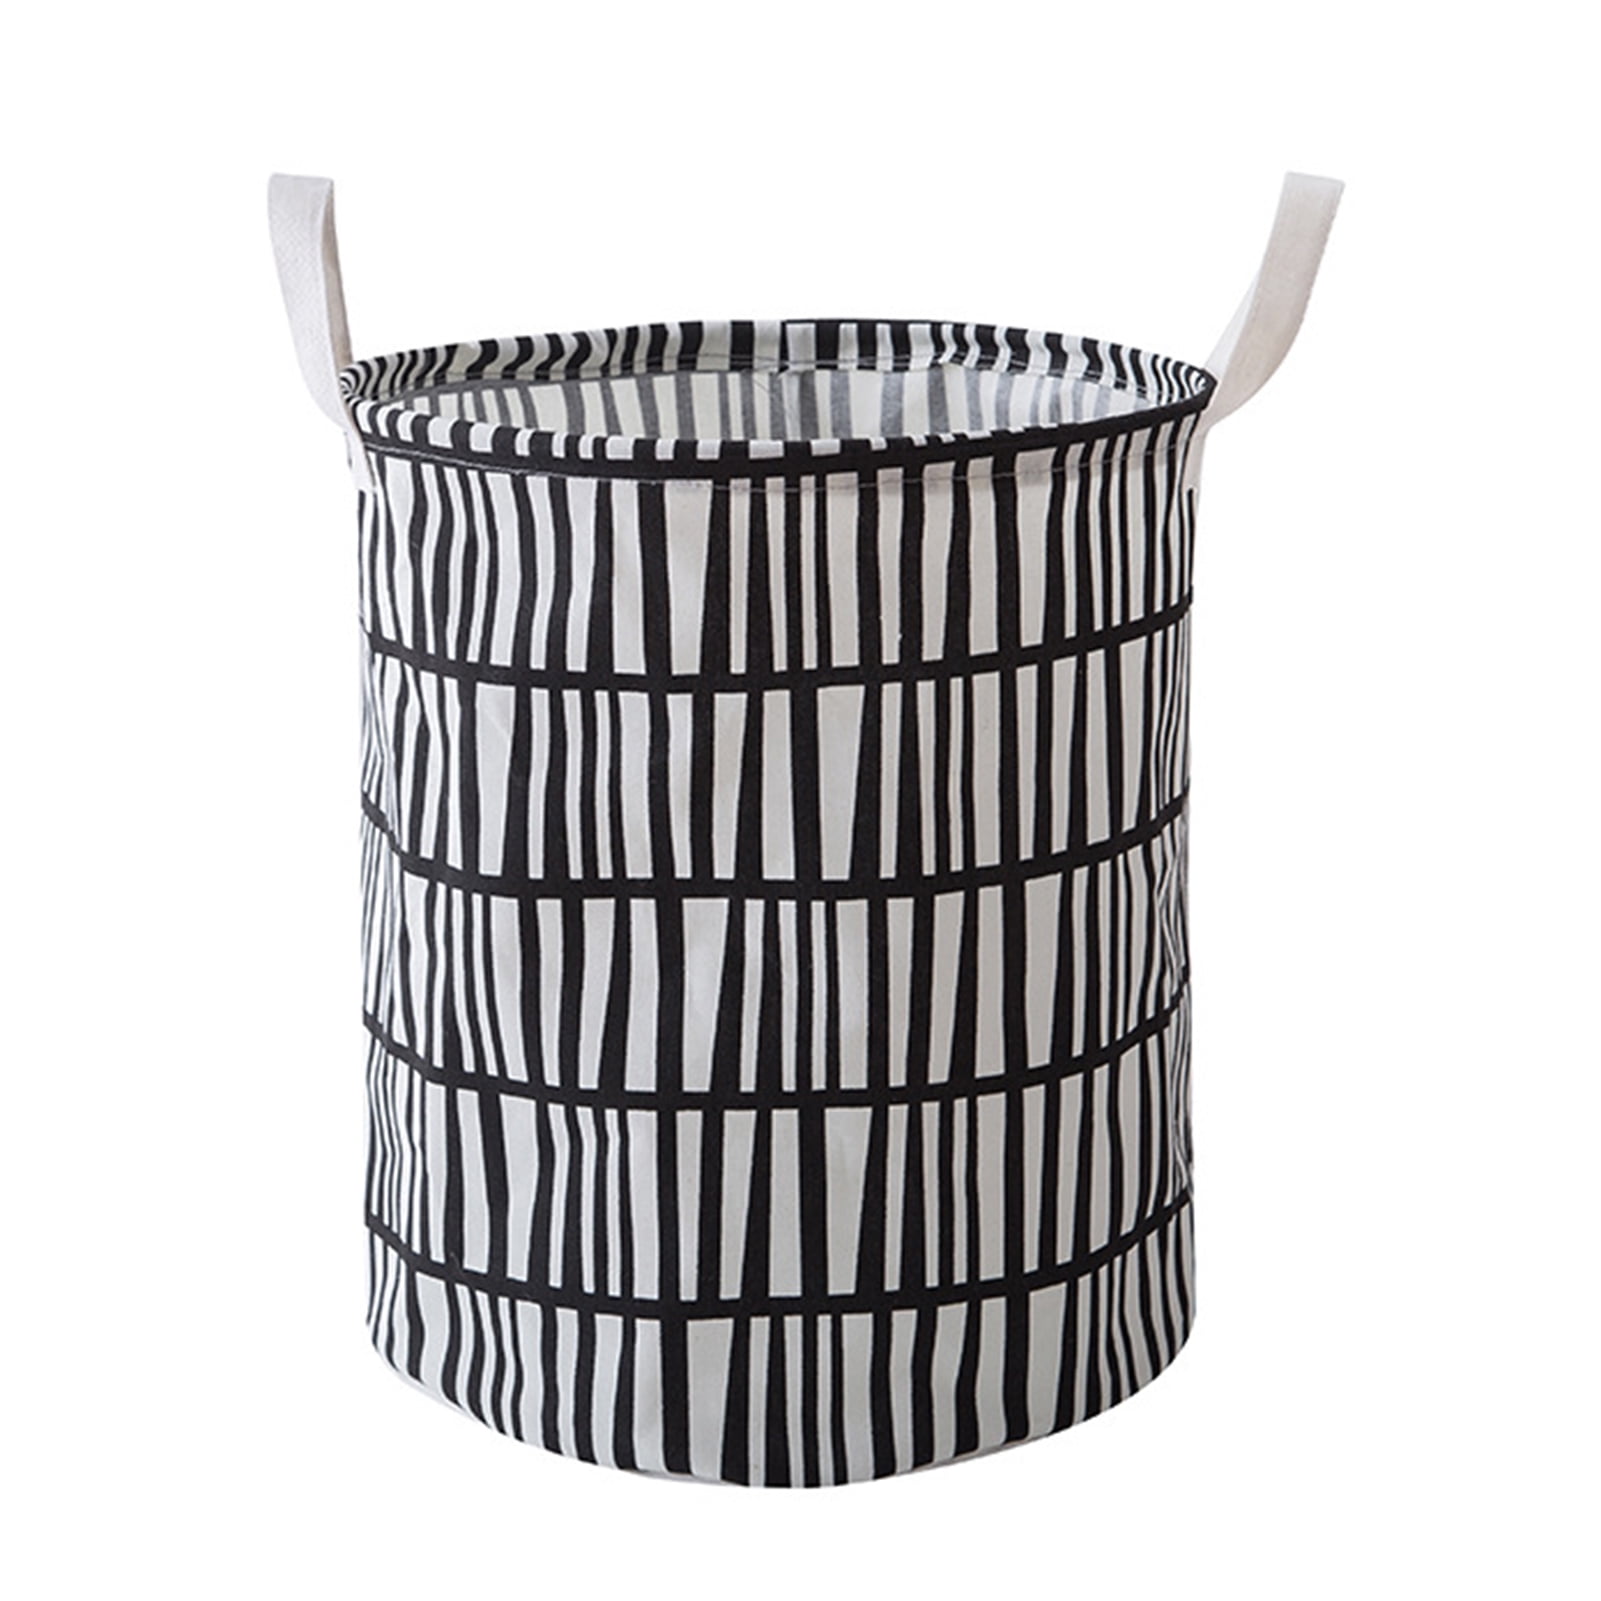 Details about   Laundry Foldable Hampers Large Washing Clothes Basket Bag Storage Bin 